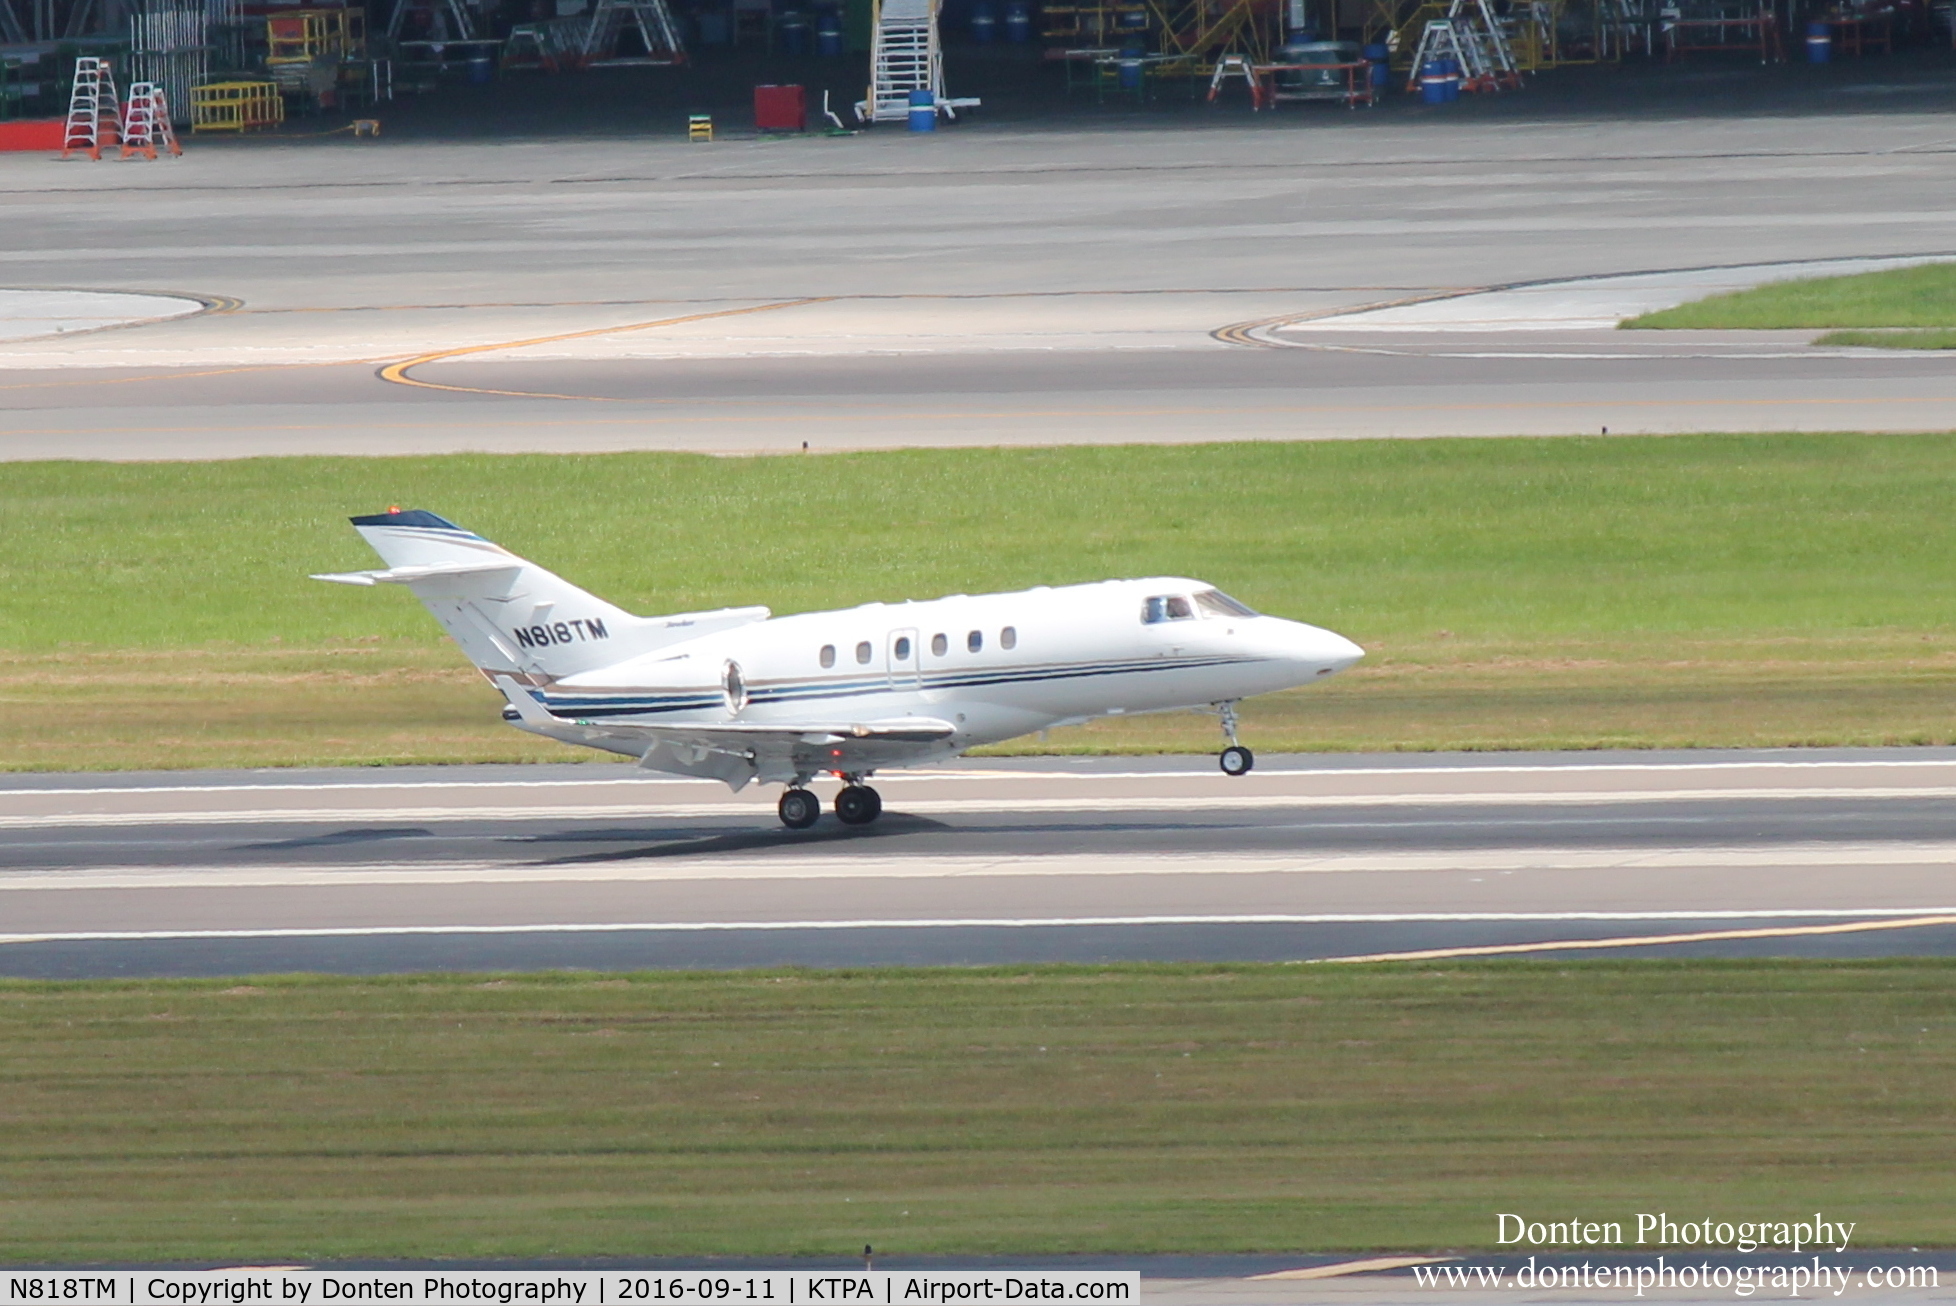 N818TM, 2000 Raytheon Hawker 800XP C/N 258463, Trailblazer 818 (N818TM) arrives at Tampa International Airport following flight from Boca Raton Airport